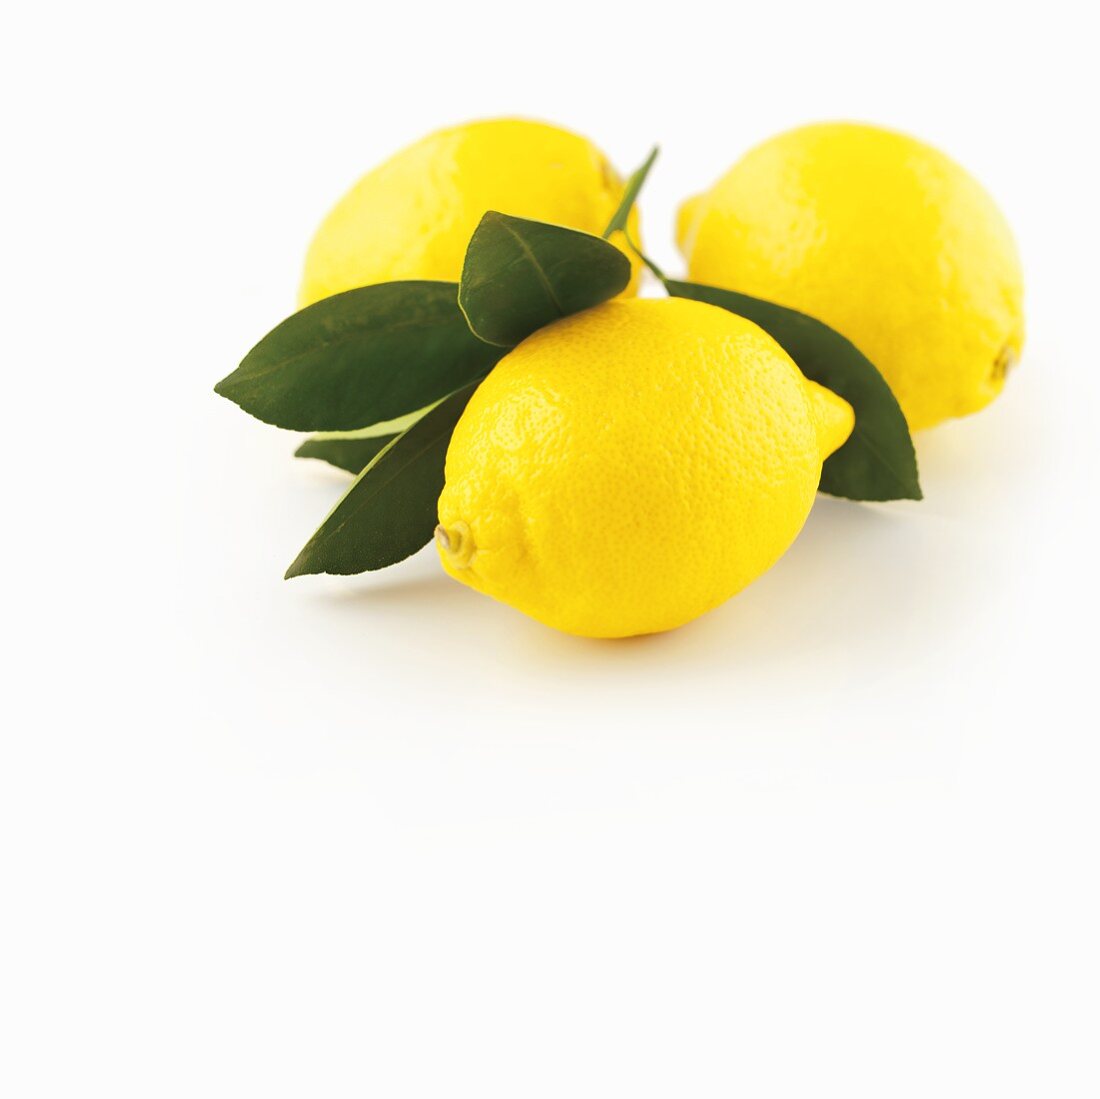 Three lemons with leaves